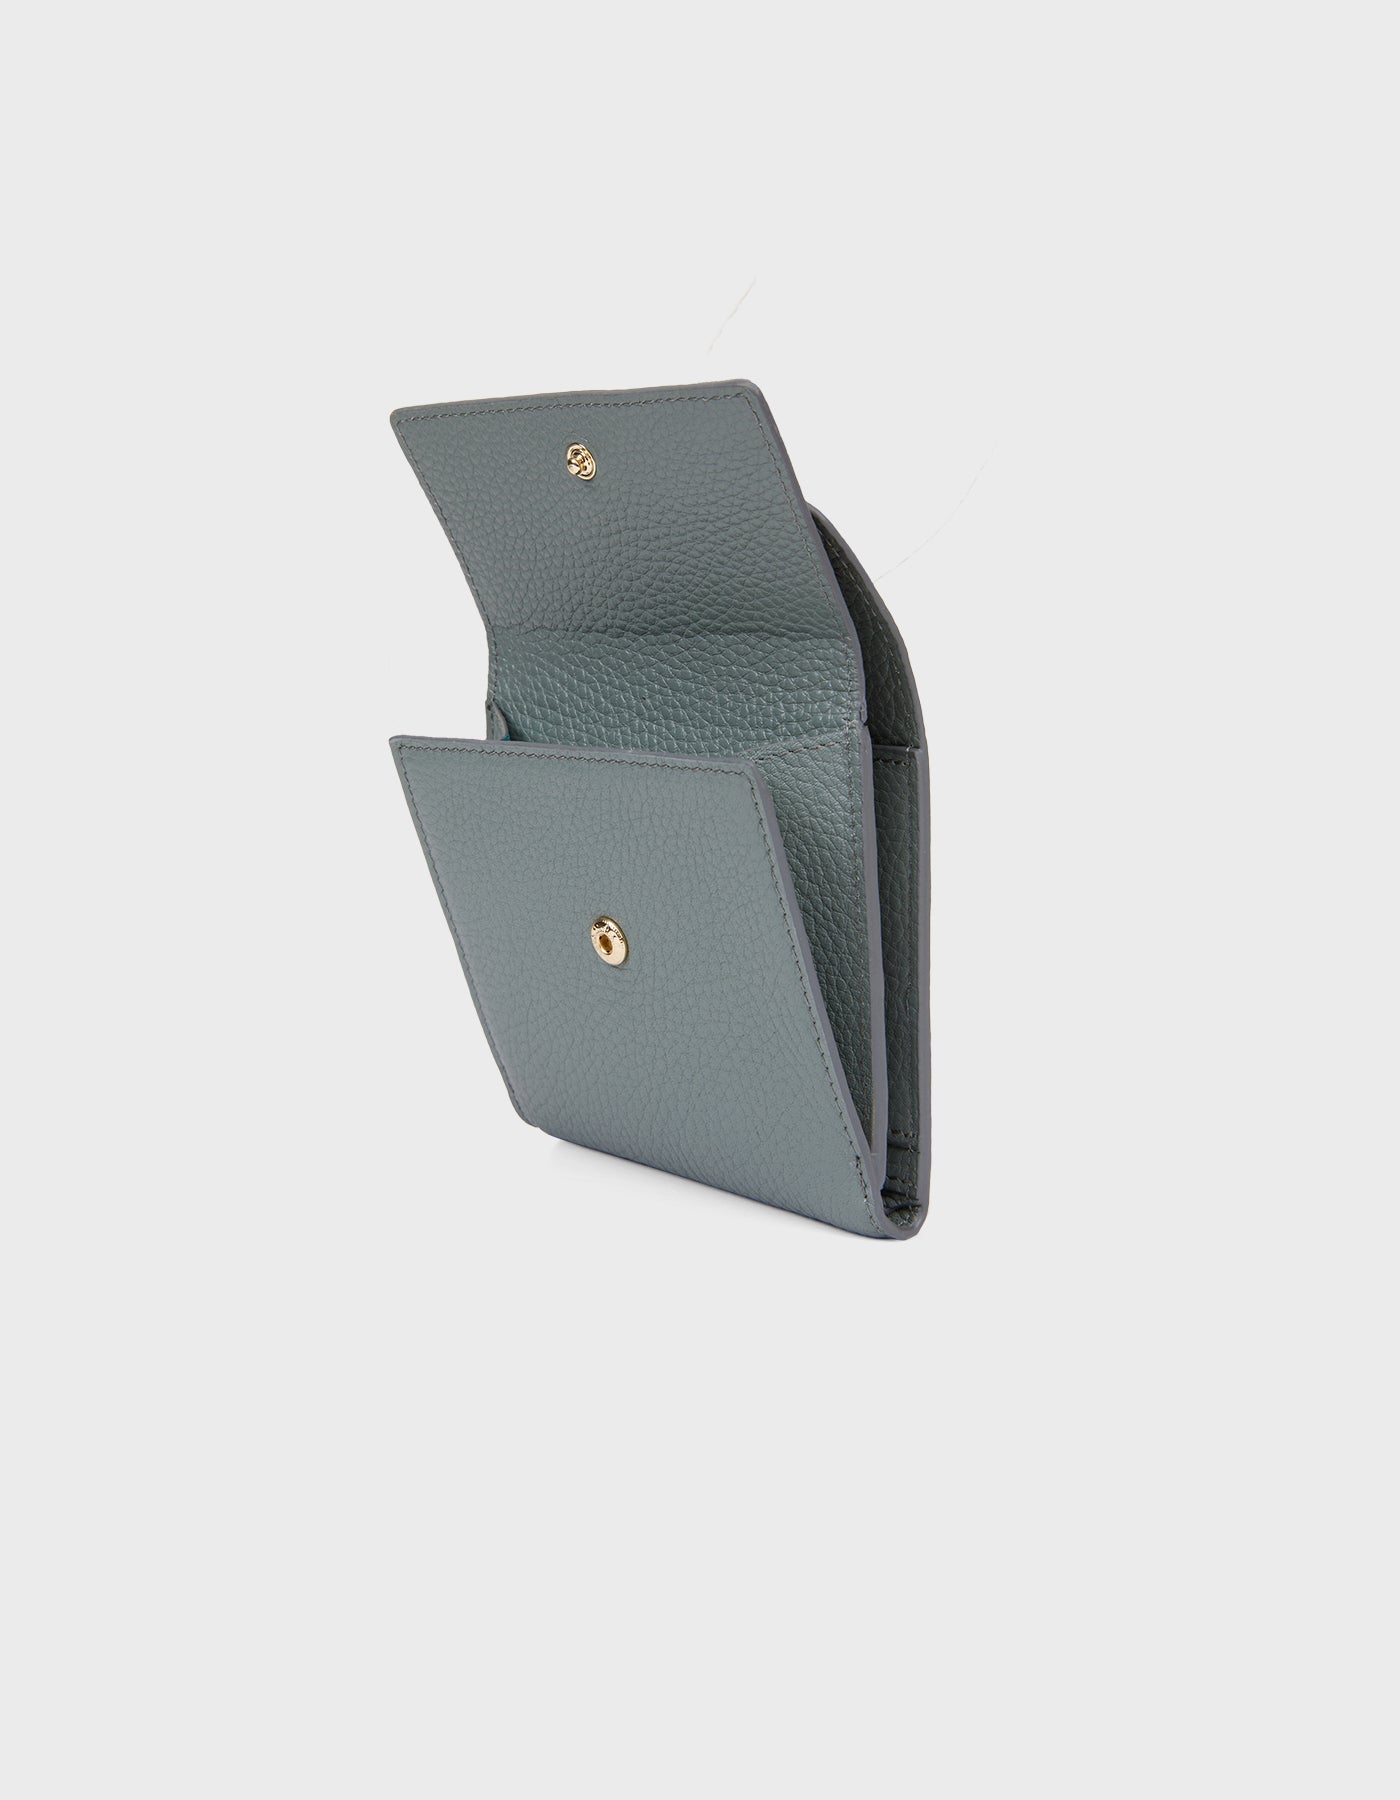 HiVa Atelier | Larus Compact Wallet Dusty Blue | Beautiful and Versatile